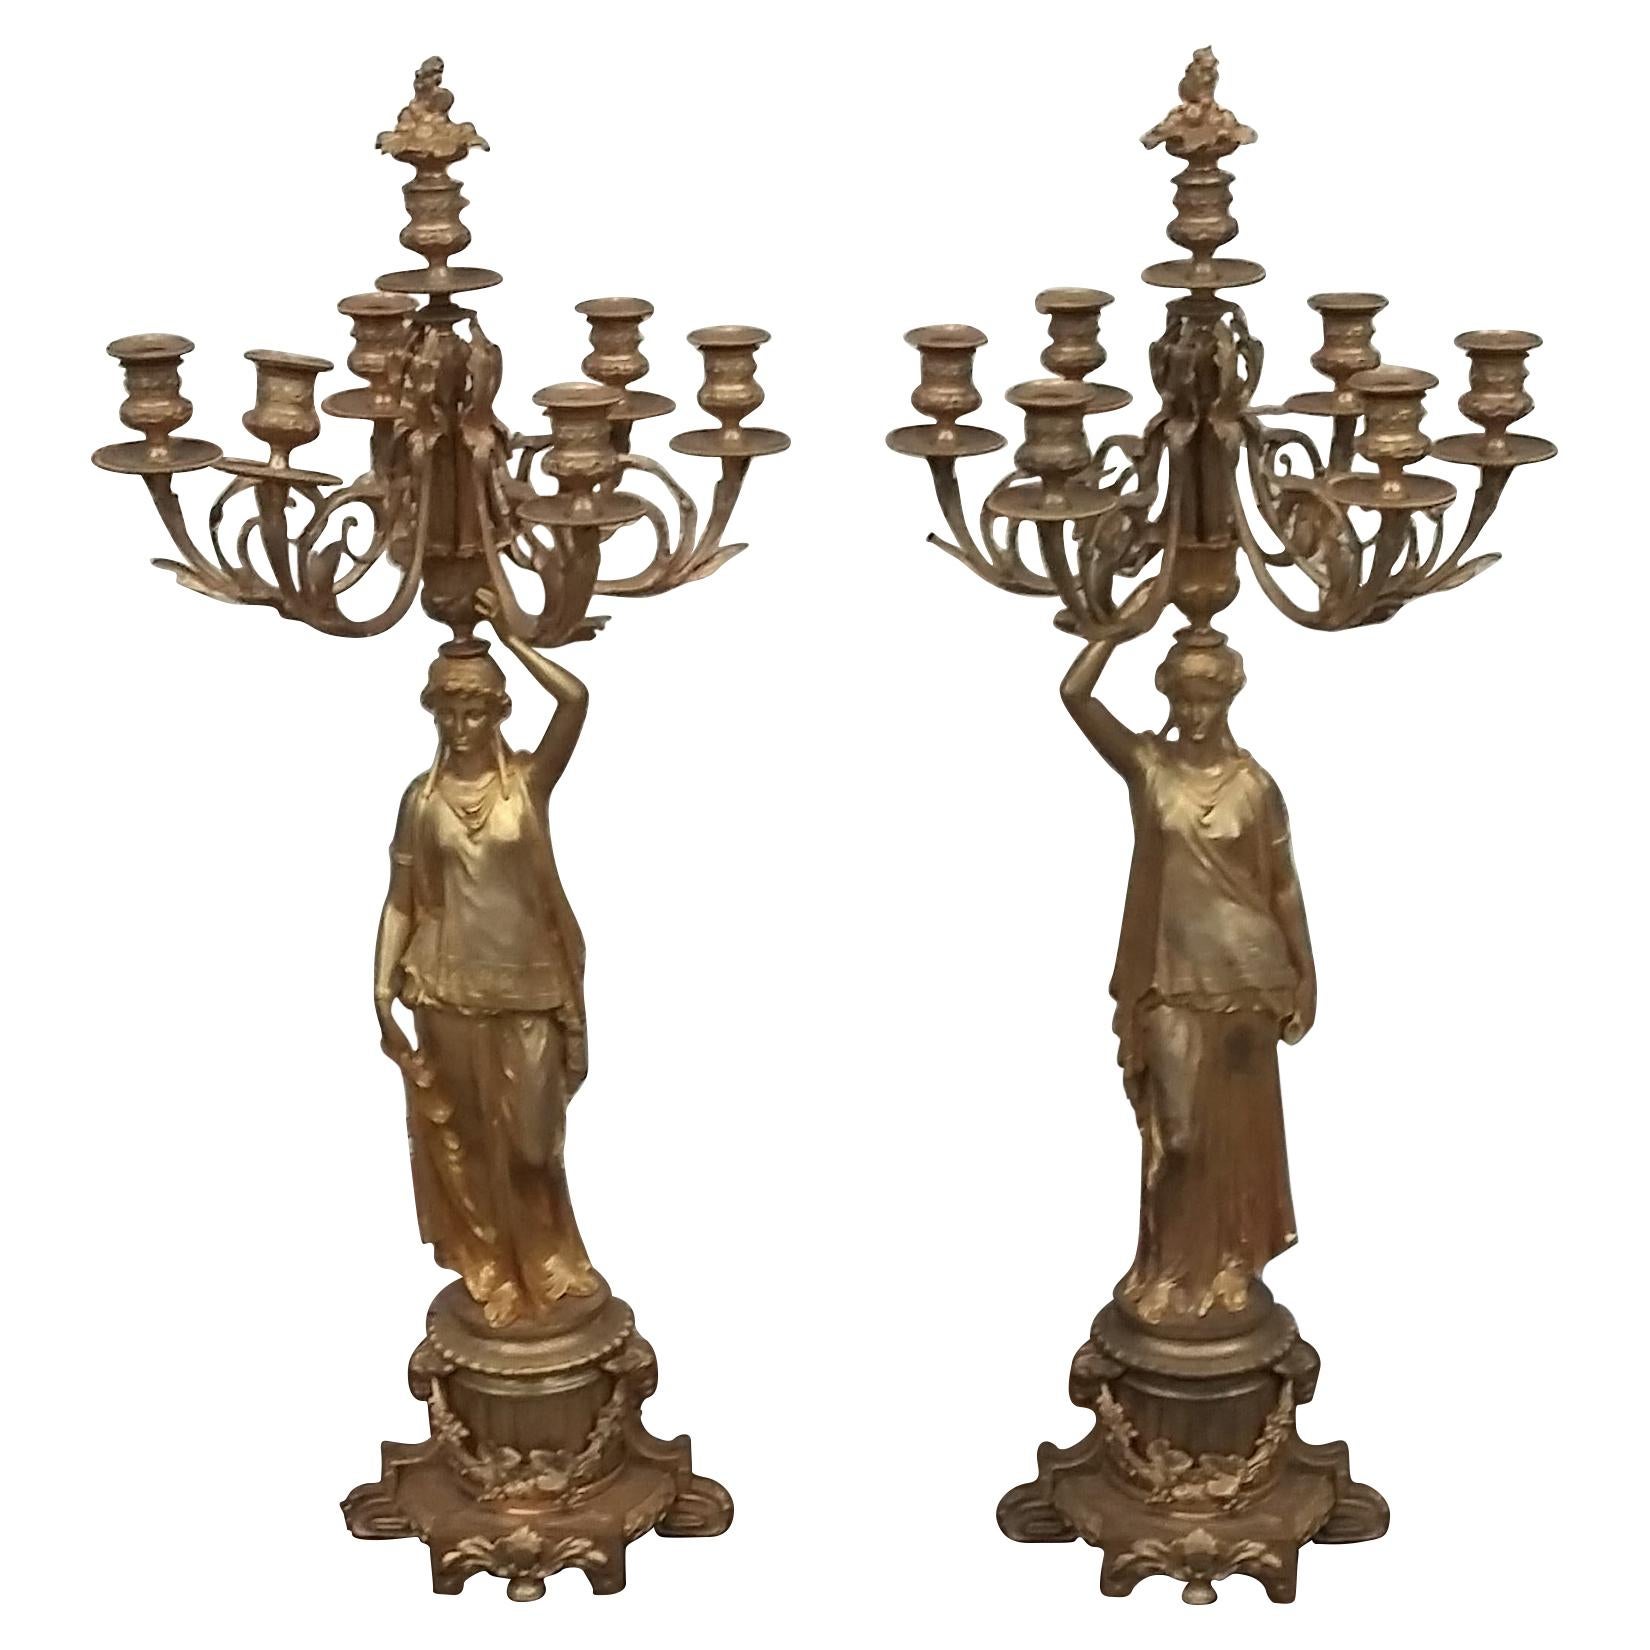 Pair of Bronze Figural Candelabras with Victorian Women